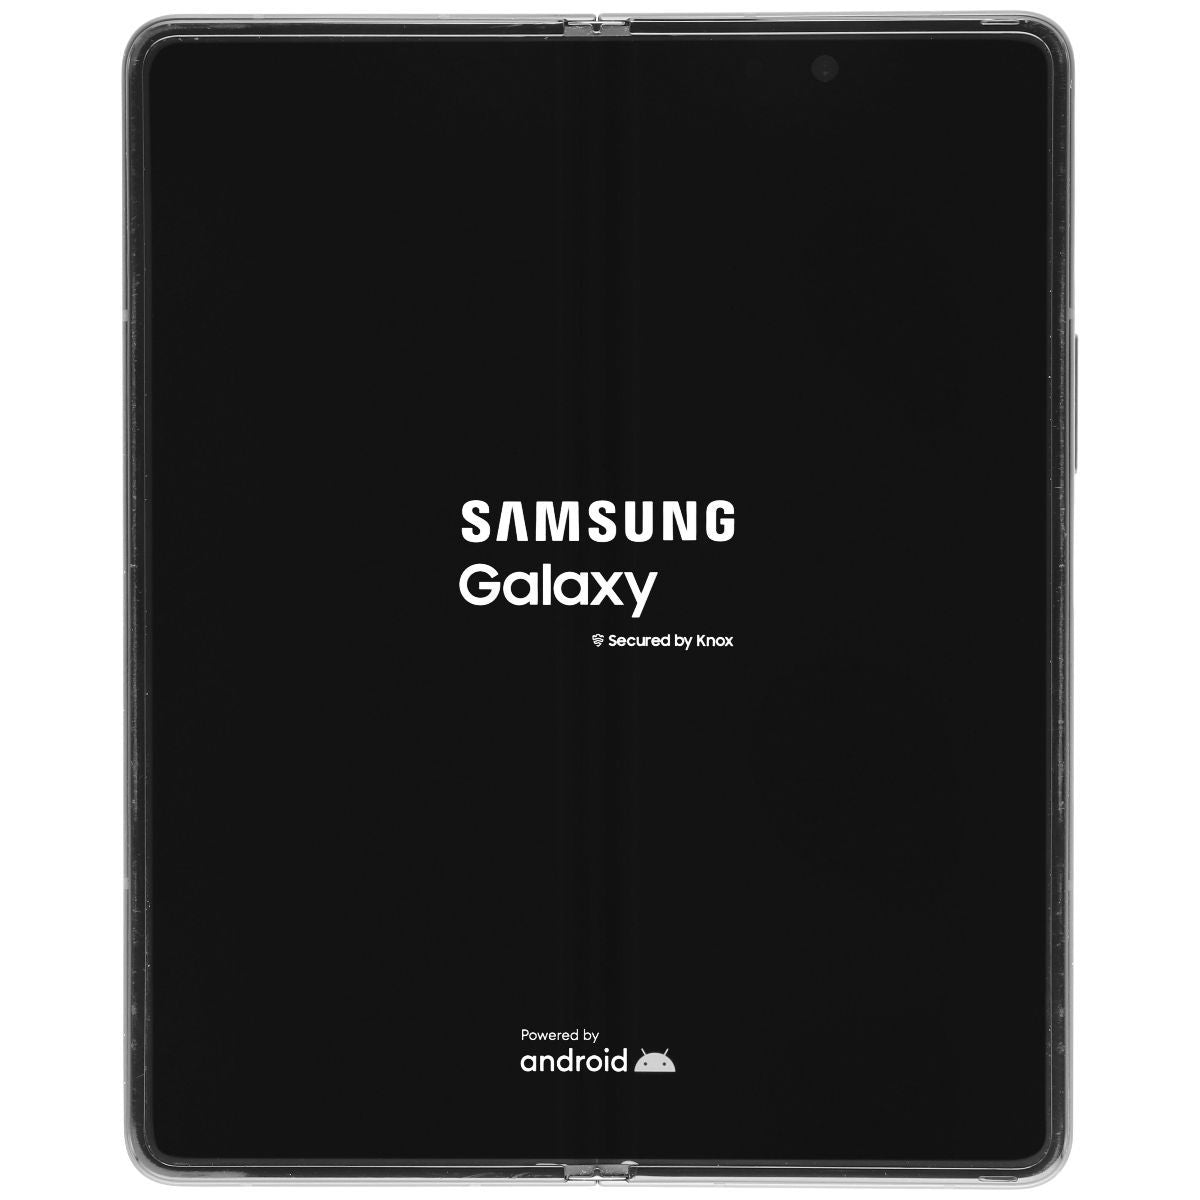 Samsung Galaxy Z Fold3 5G (7.6-in) Smartphone (SM-F926U1) Unlocked - 256GB/Black Cell Phones & Smartphones Samsung    - Simple Cell Bulk Wholesale Pricing - USA Seller